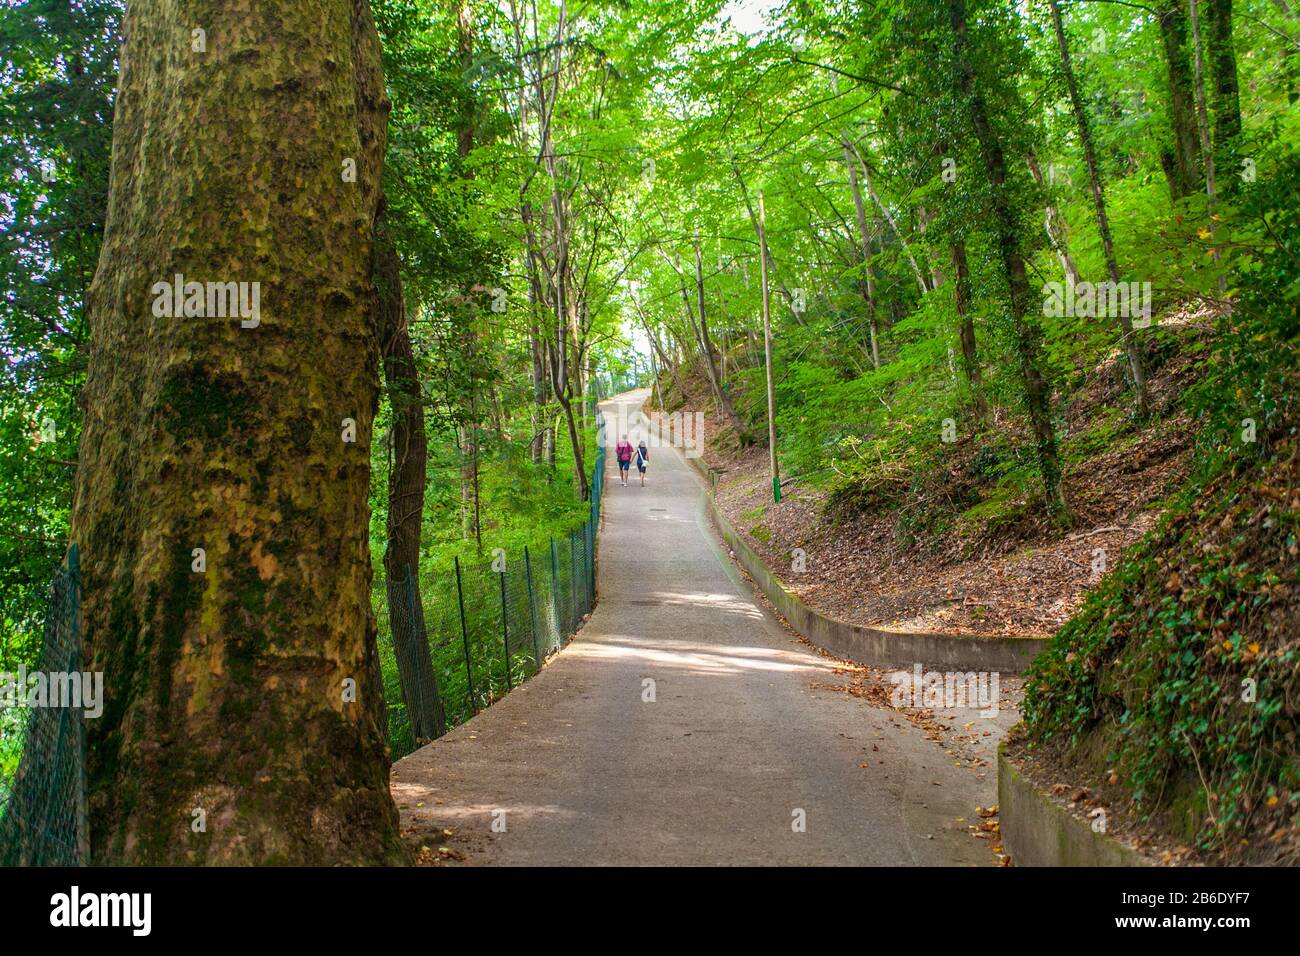 The road into the forest to Villa al Balbianello, Lenno, Lombardy, Italy Stock Photo